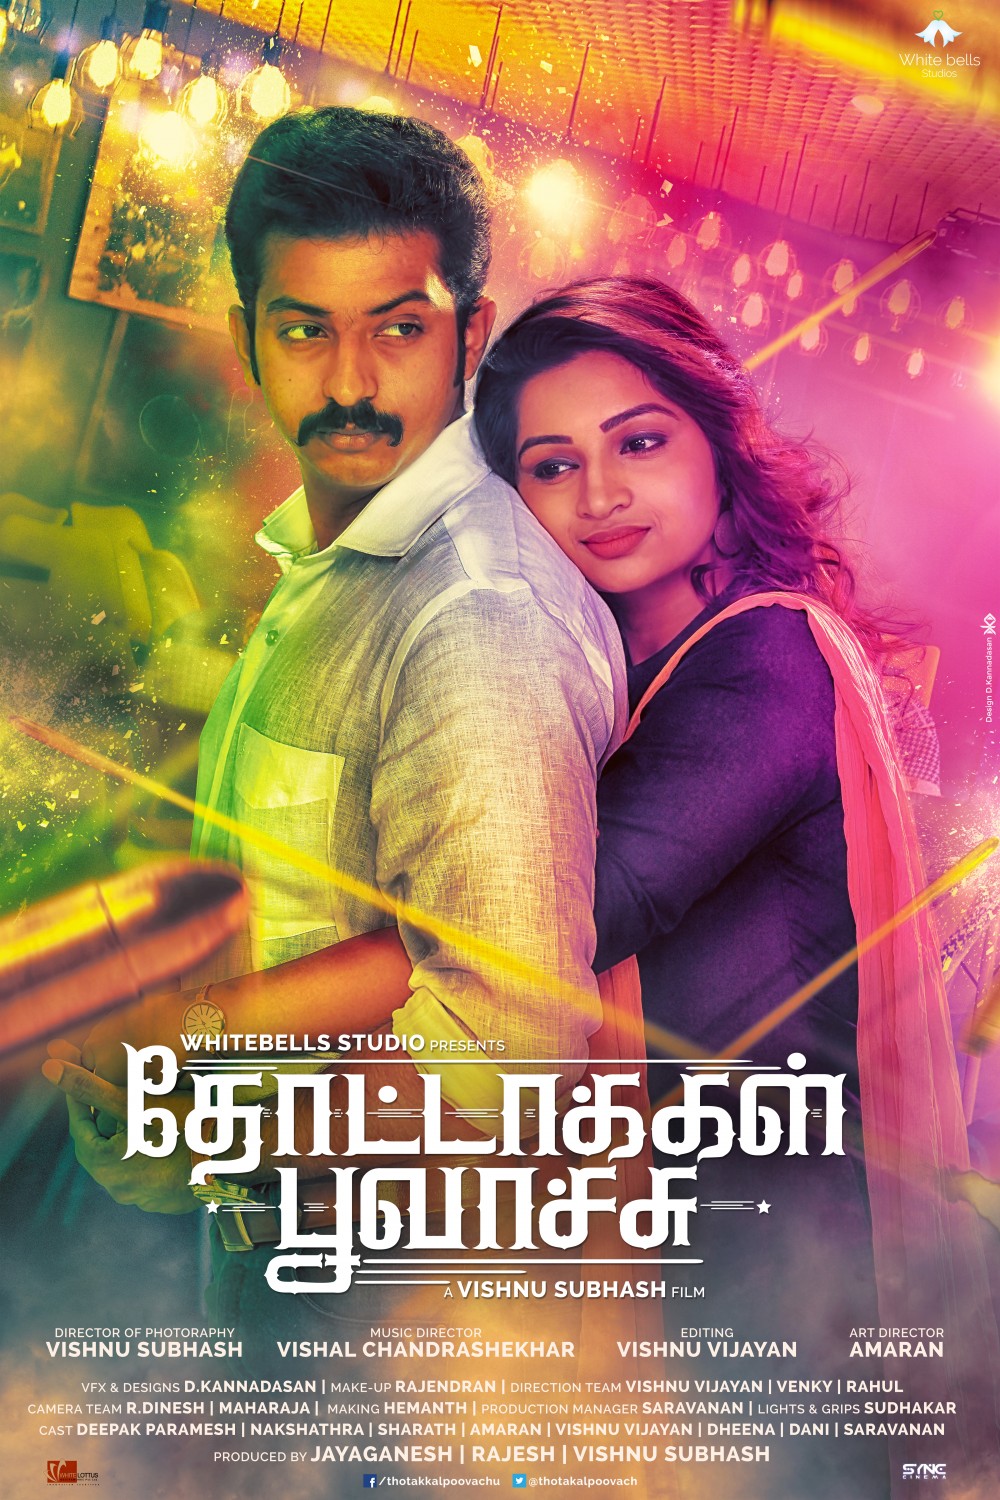 Extra Large Movie Poster Image for Thotakkal Poovachu